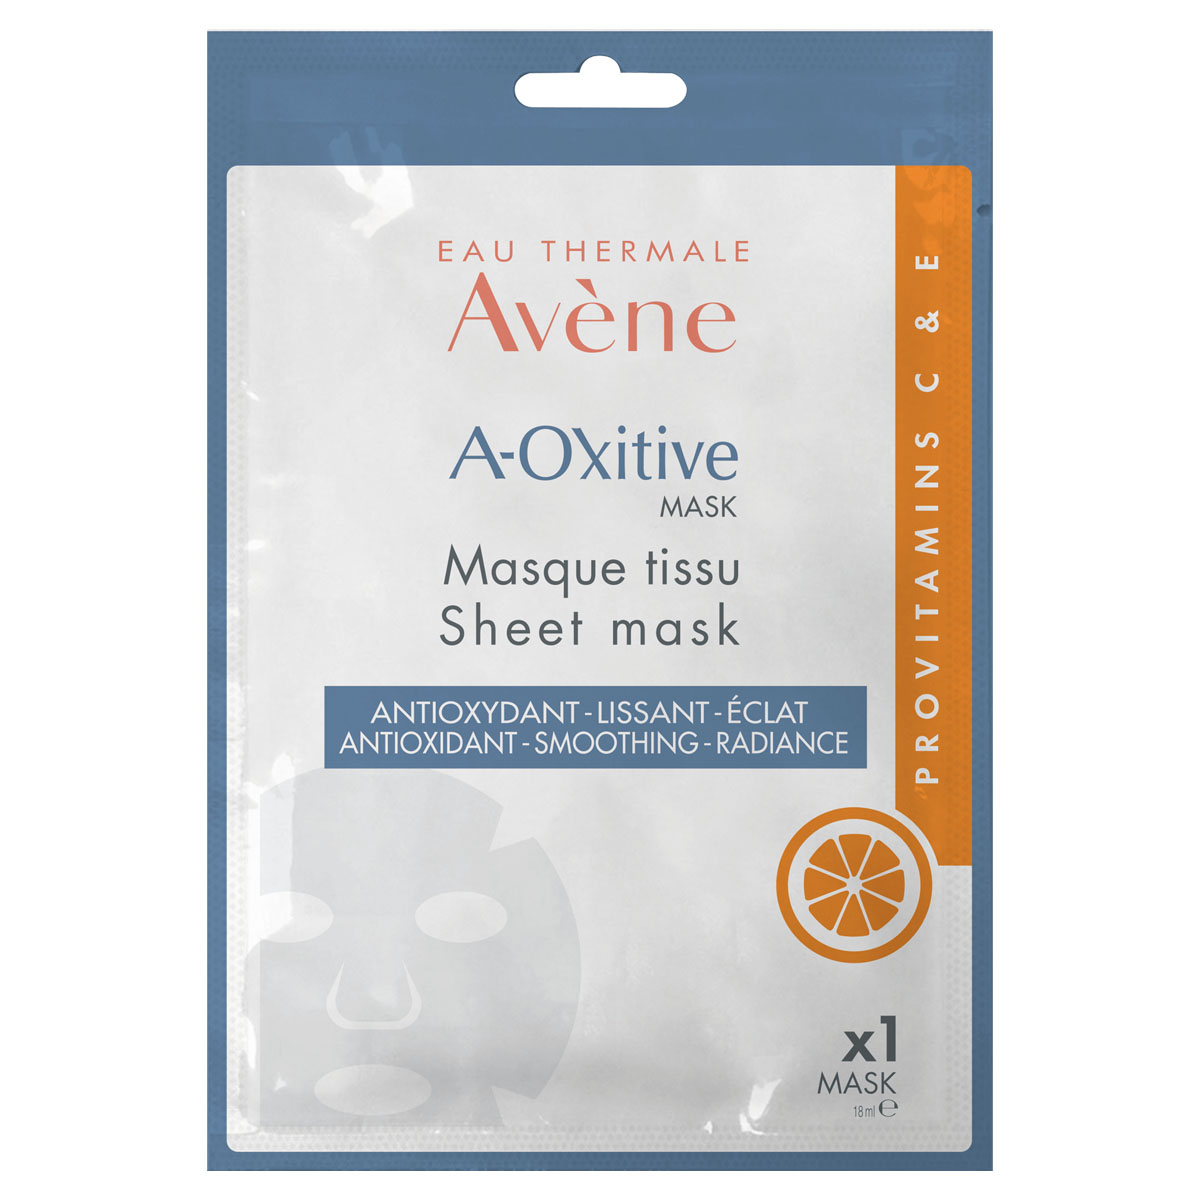 Маска Avene a-oxitive Антиоксидантная разглаживающая тканевая avene а окситив маска тканевая антиоксидантная разглаживающая 1 шт